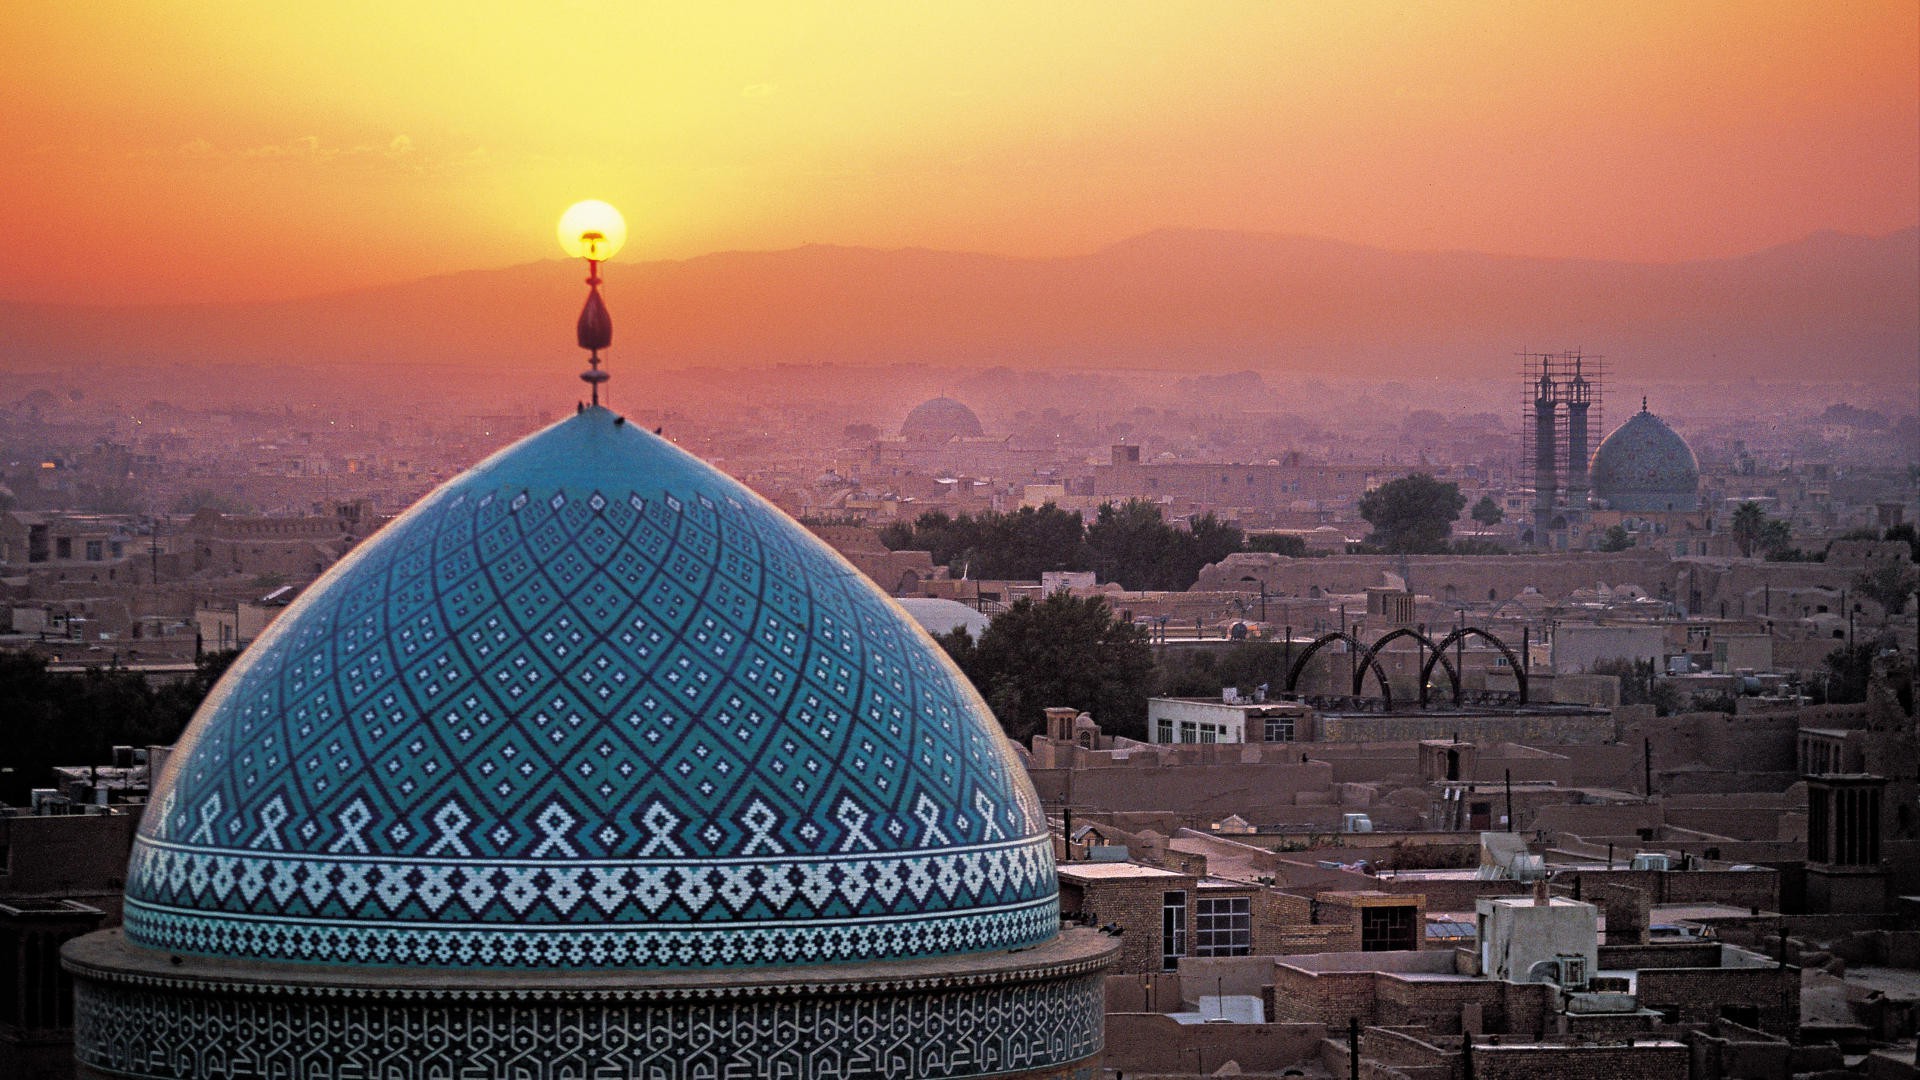 Islam, Iran, Sunset, Islamic architecture, Mosque ...